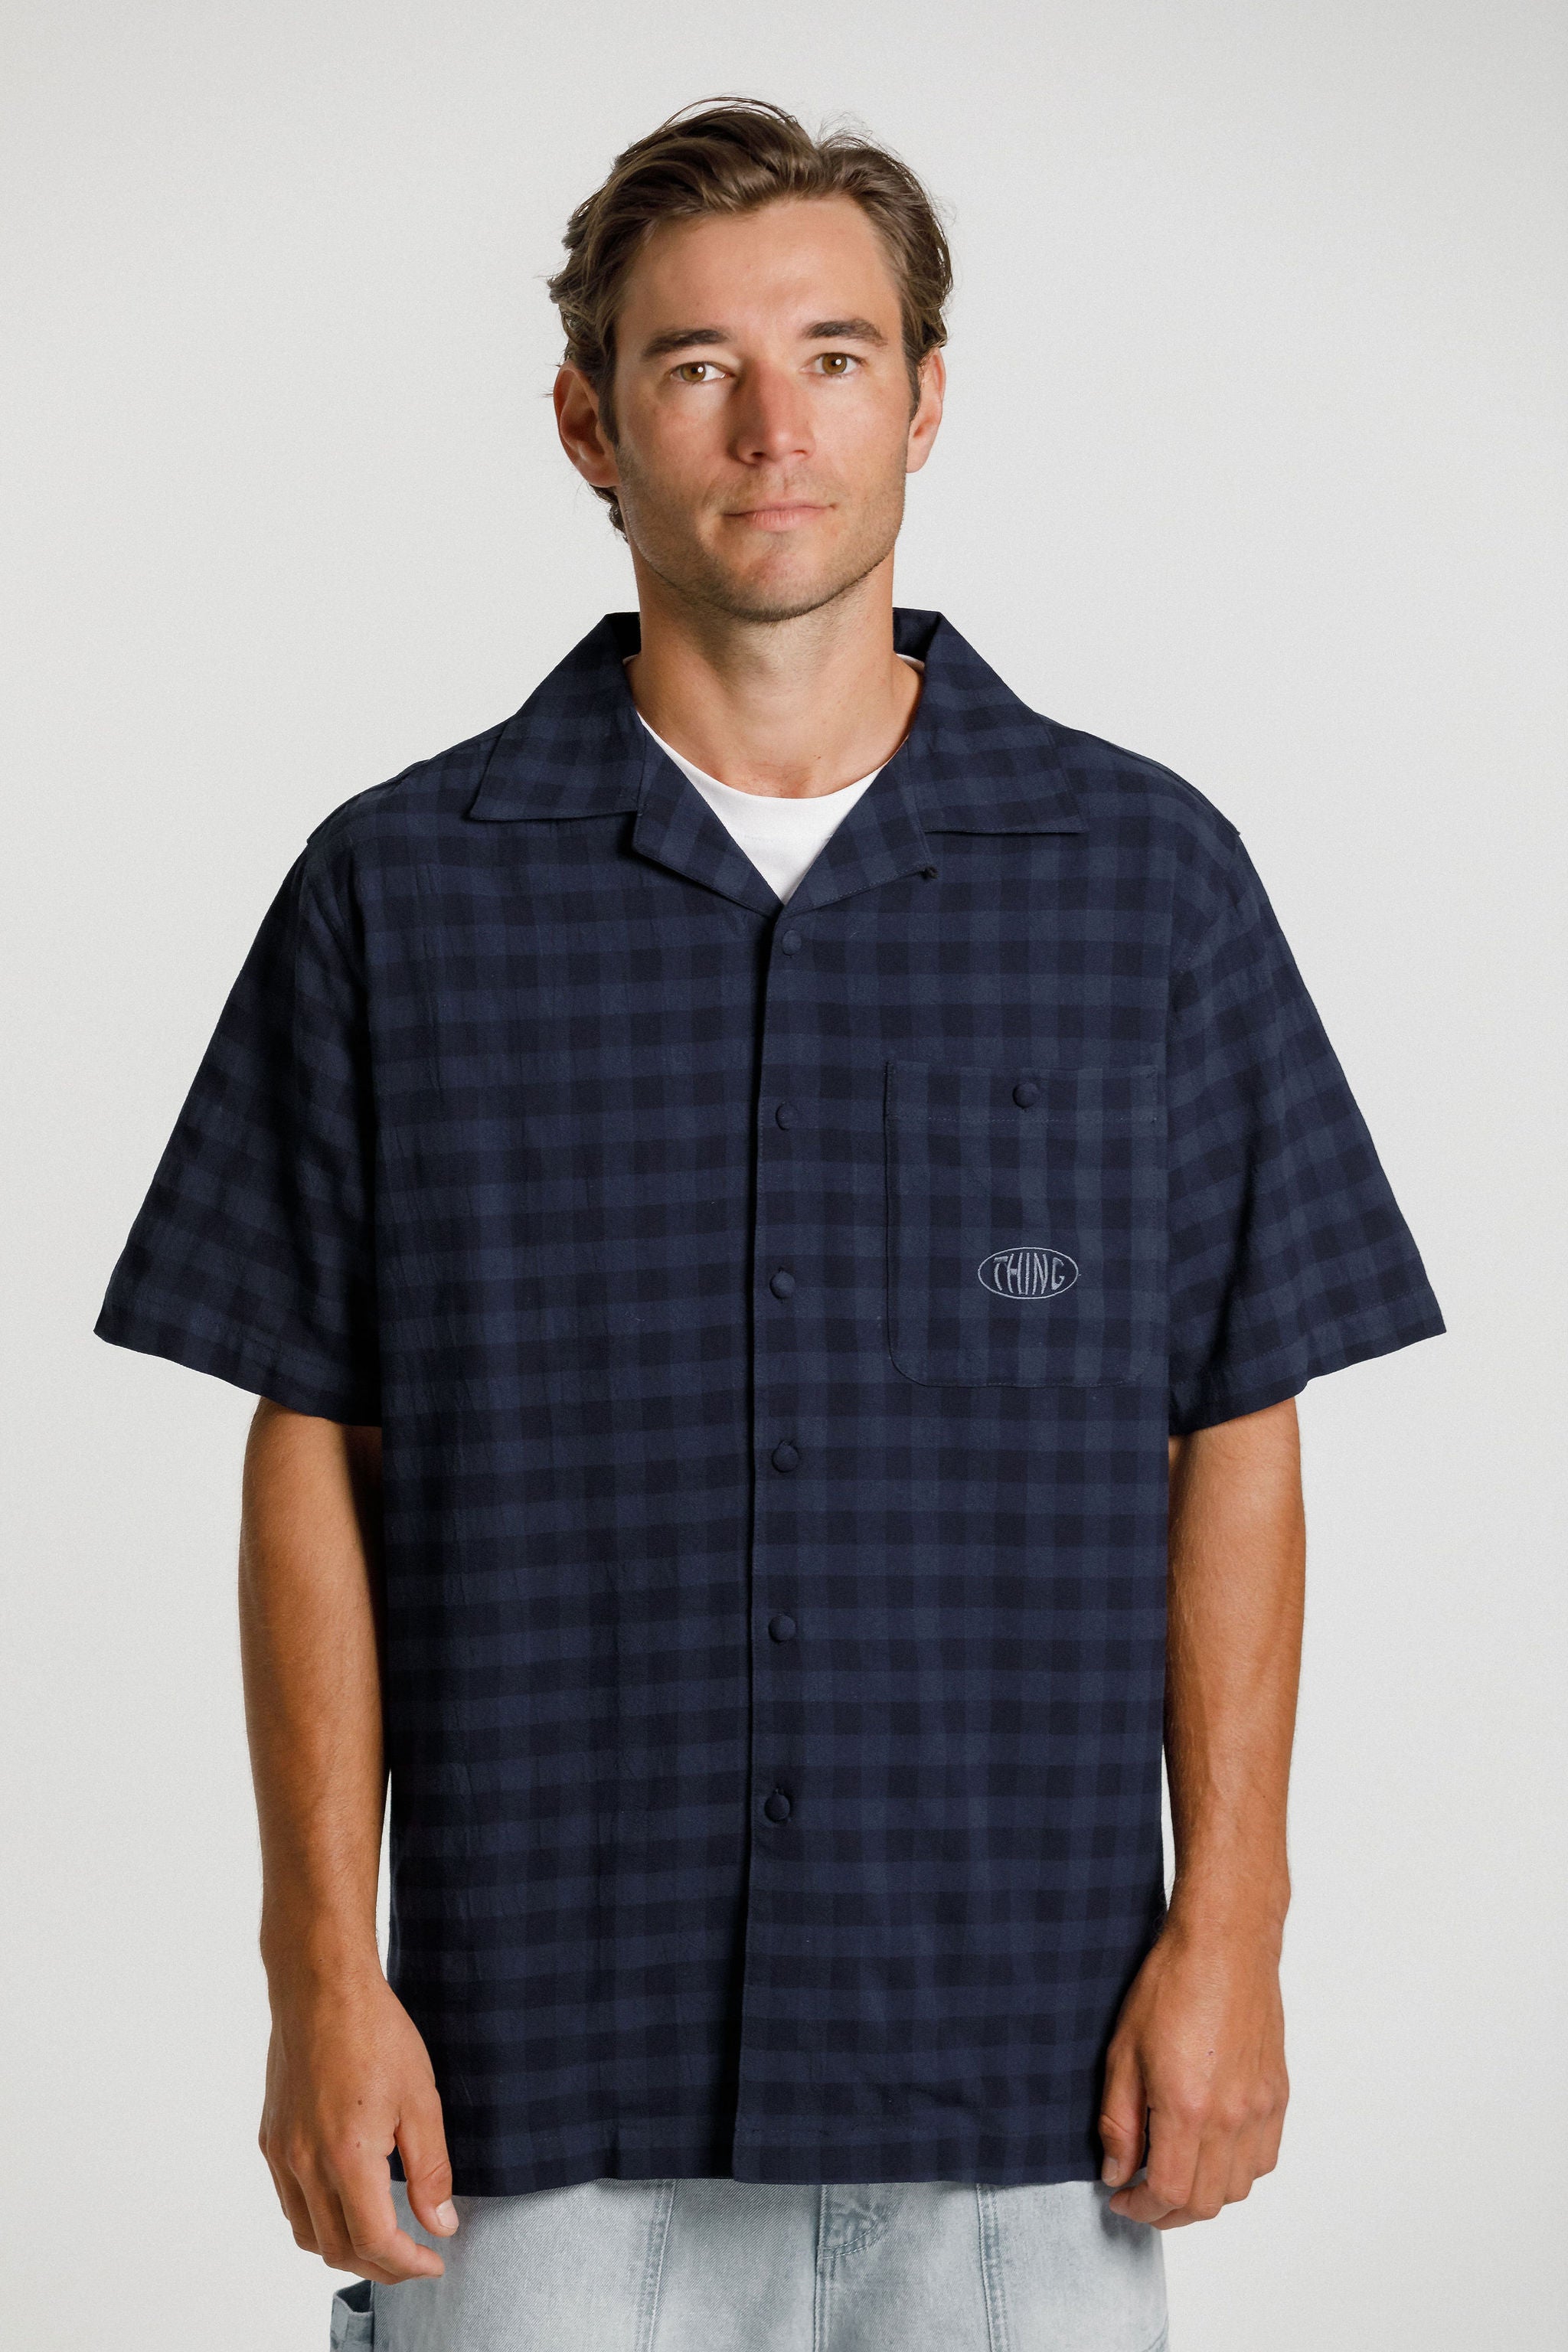 Trope Shirt - Sale - Navy Check